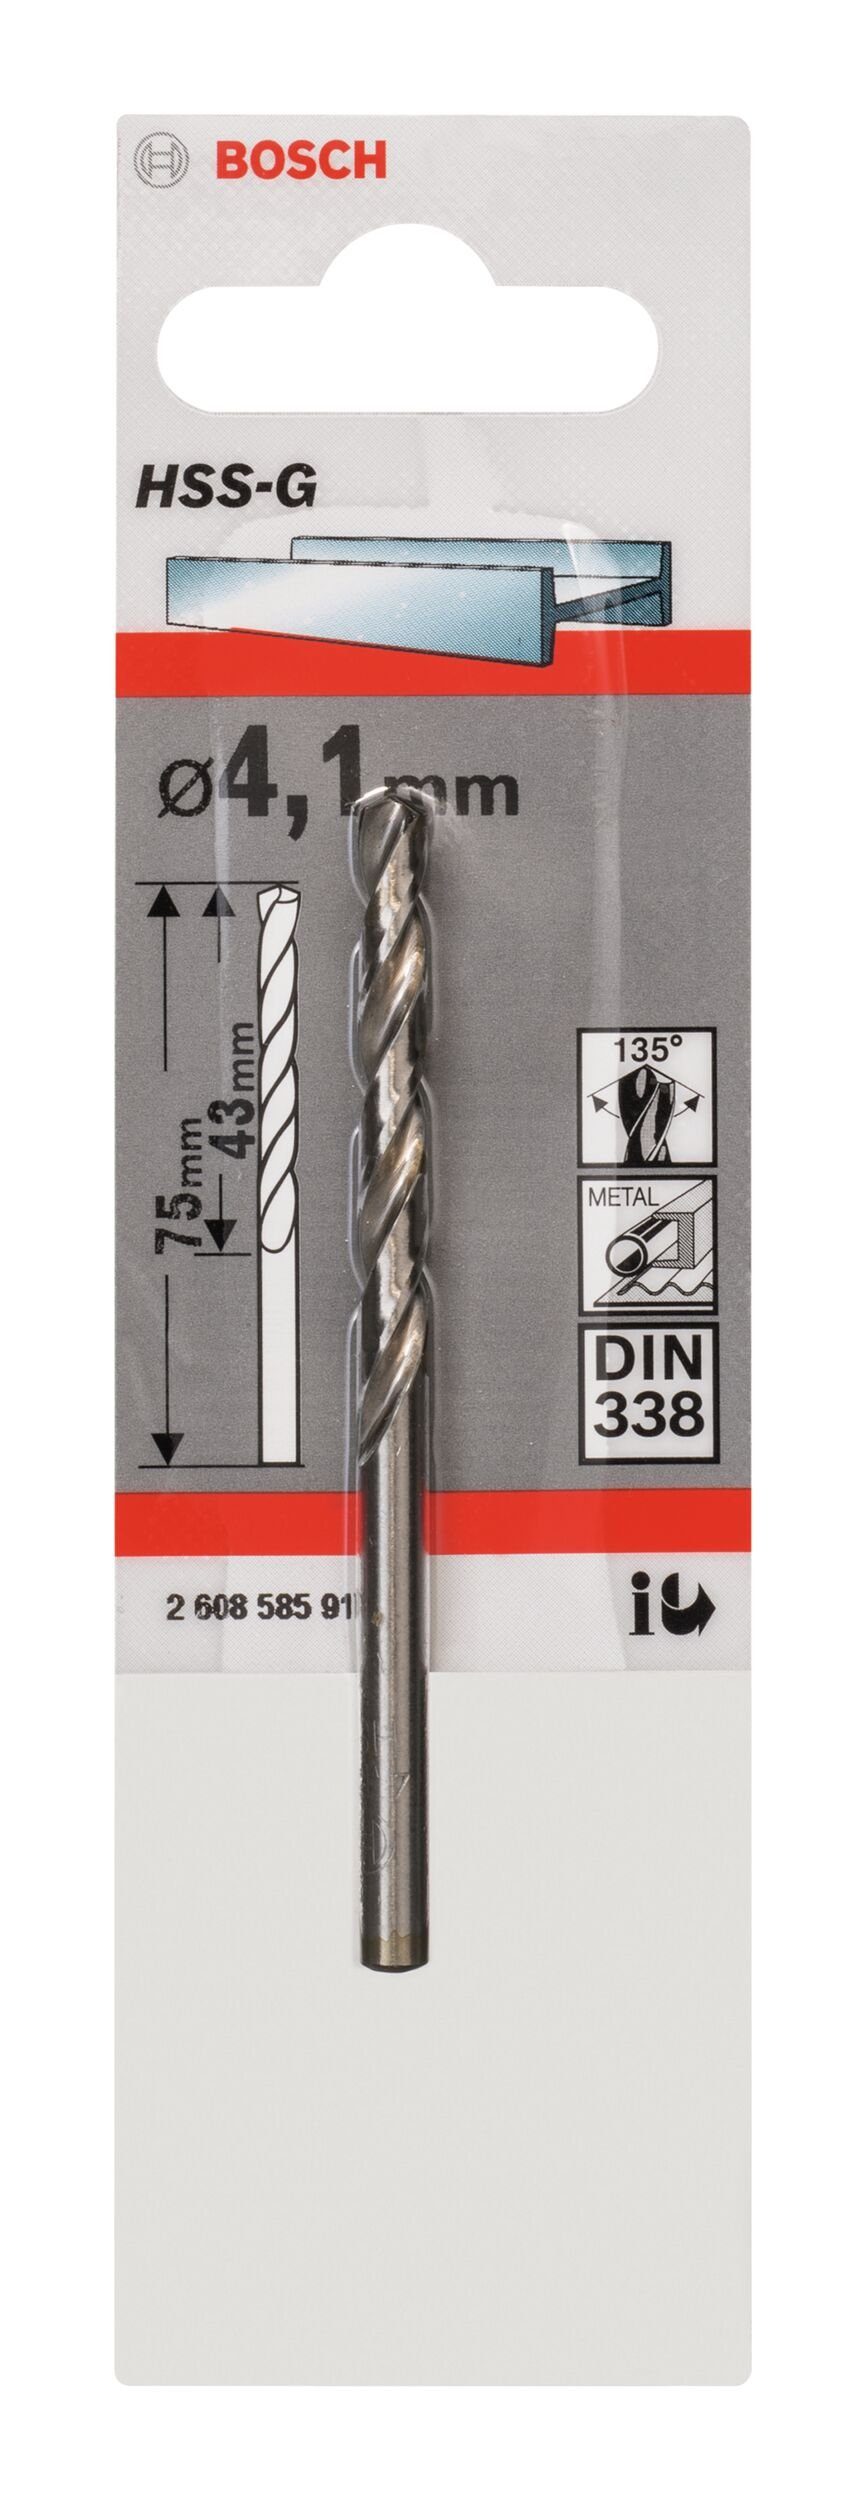 x BOSCH Metallbohrer, 43 - x mm 338) 1er-Pack 4,1 (DIN HSS-G 75 -